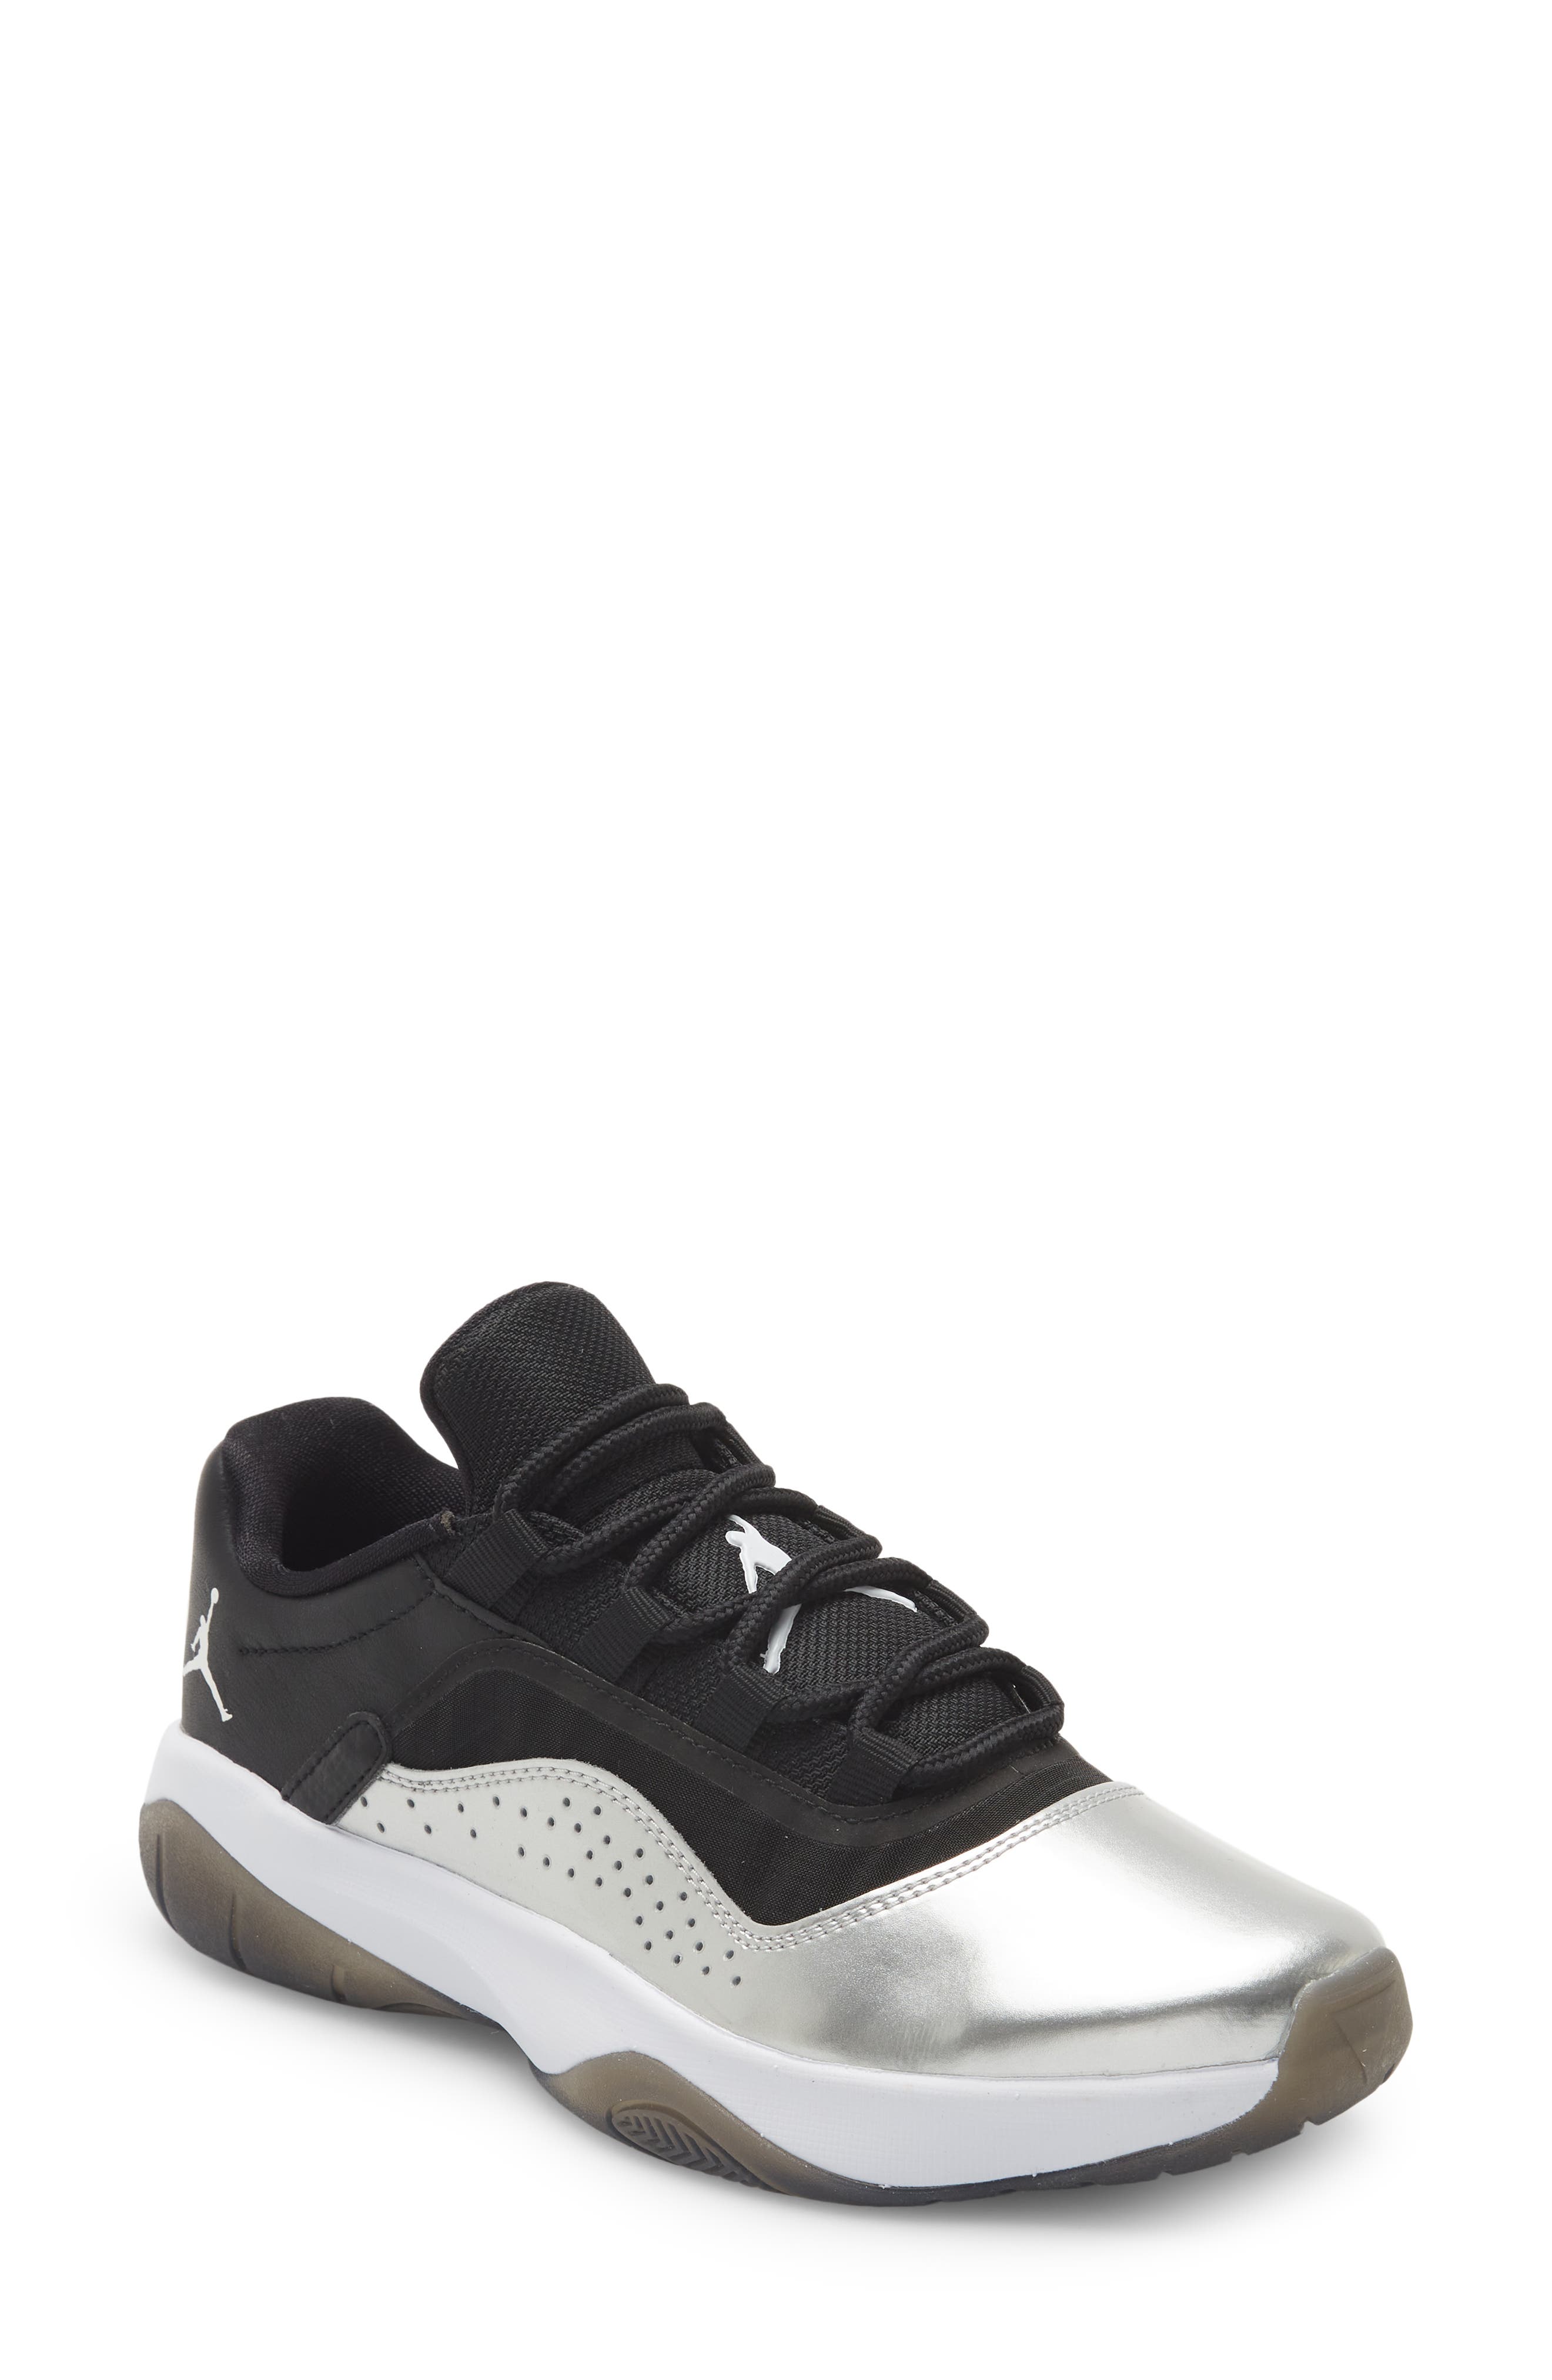 black jordan tennis shoes